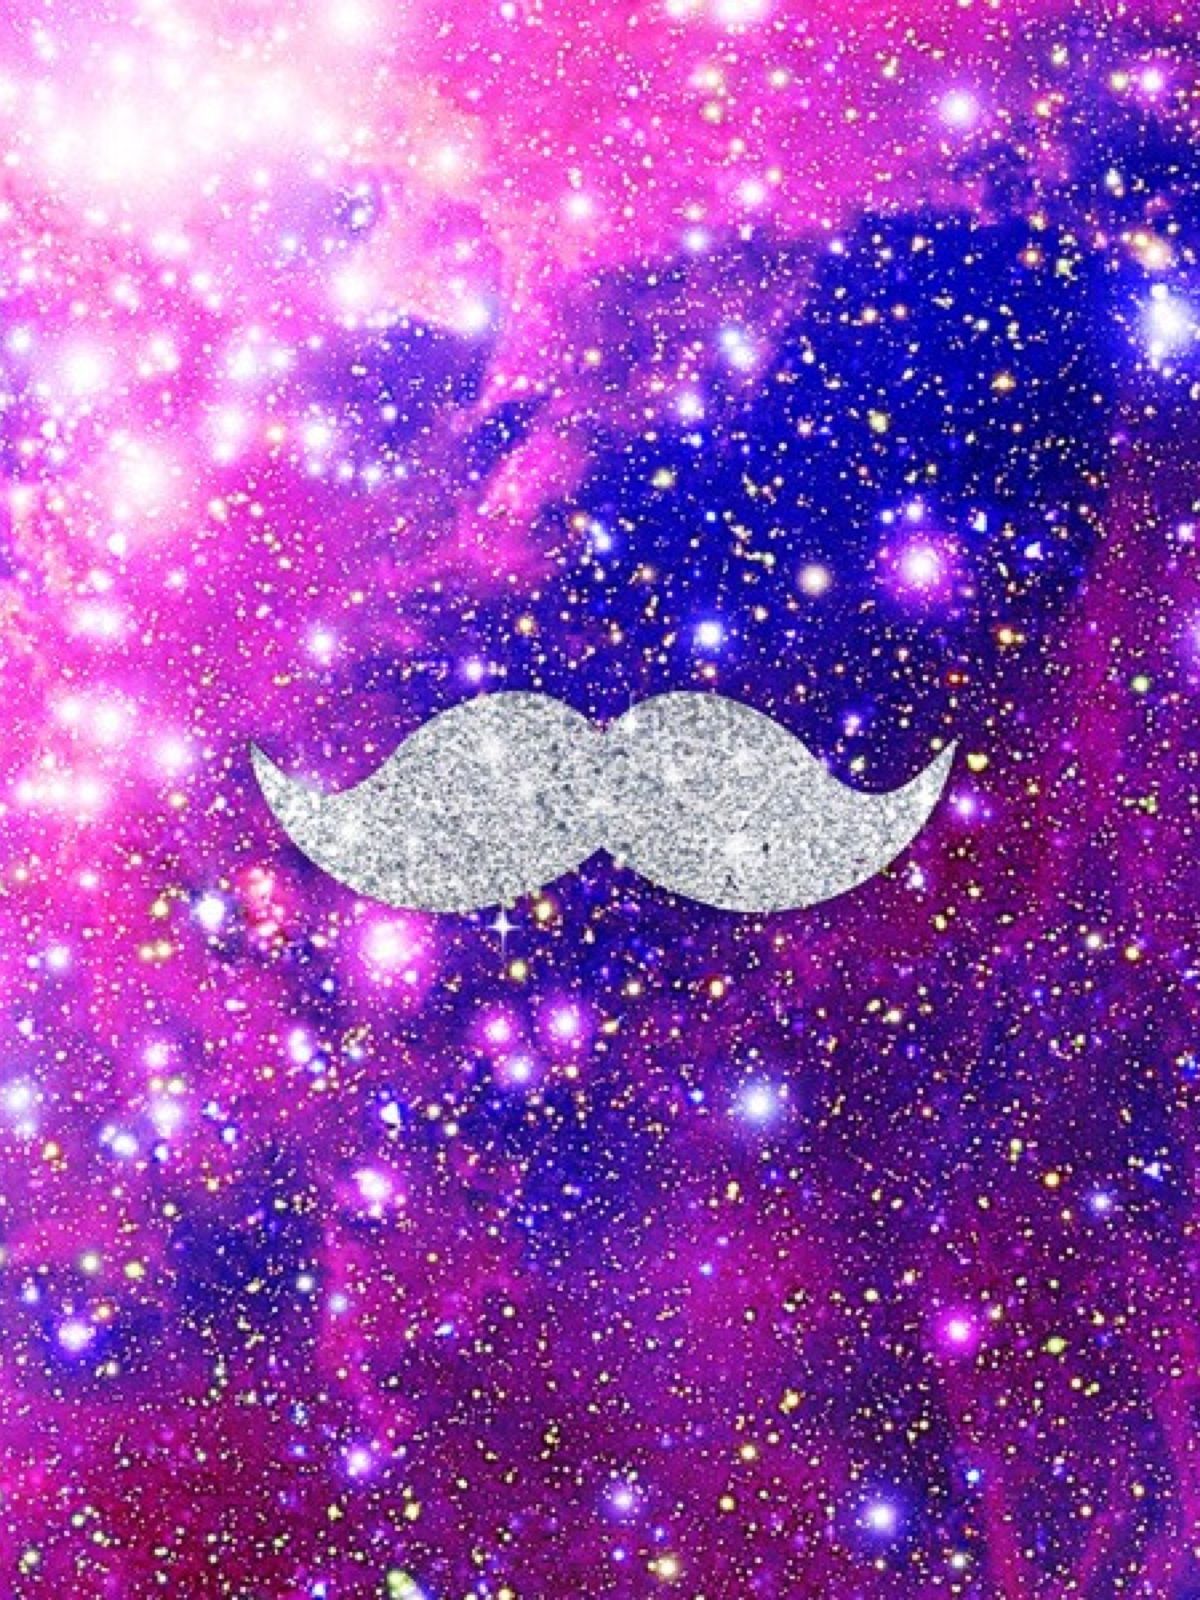 Galaxy moustache!OMG I LOVE IT